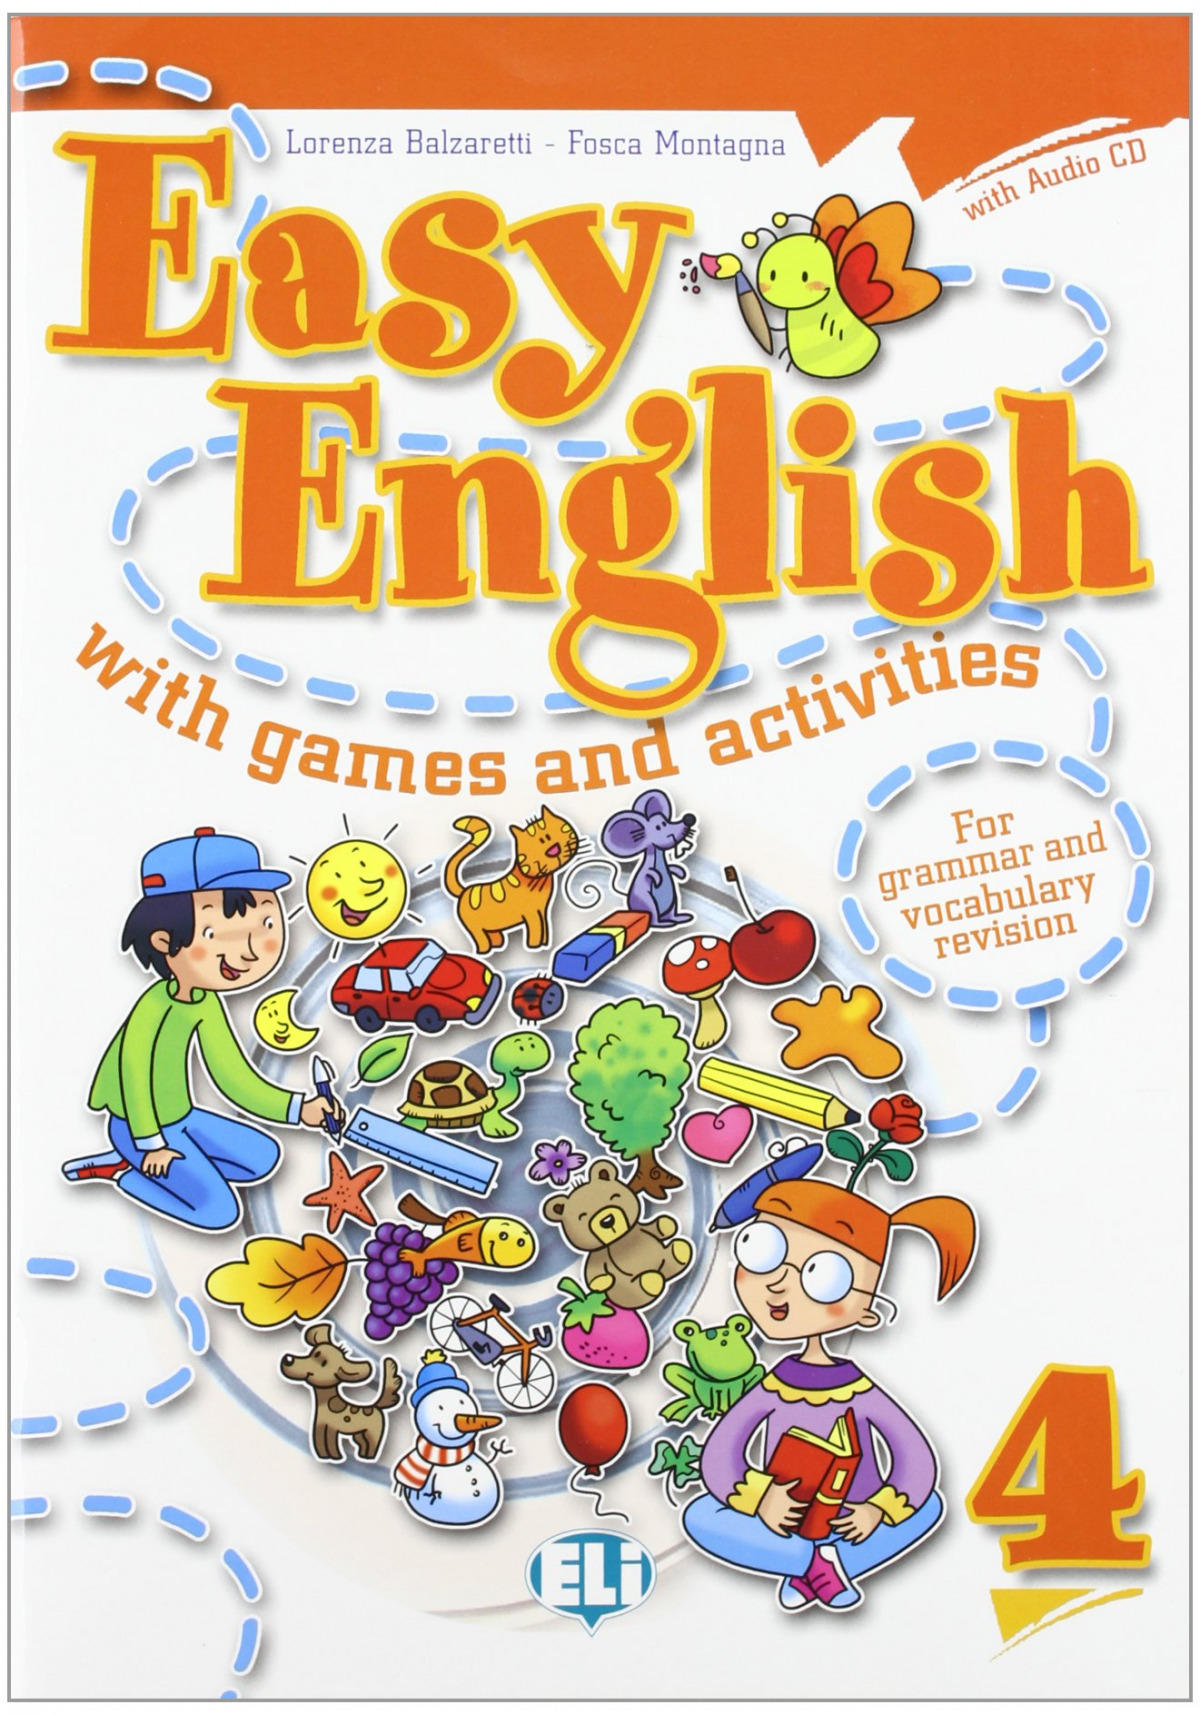 easy english with games and activities - Montagna, Fosca/Balzaretti, Lorenza